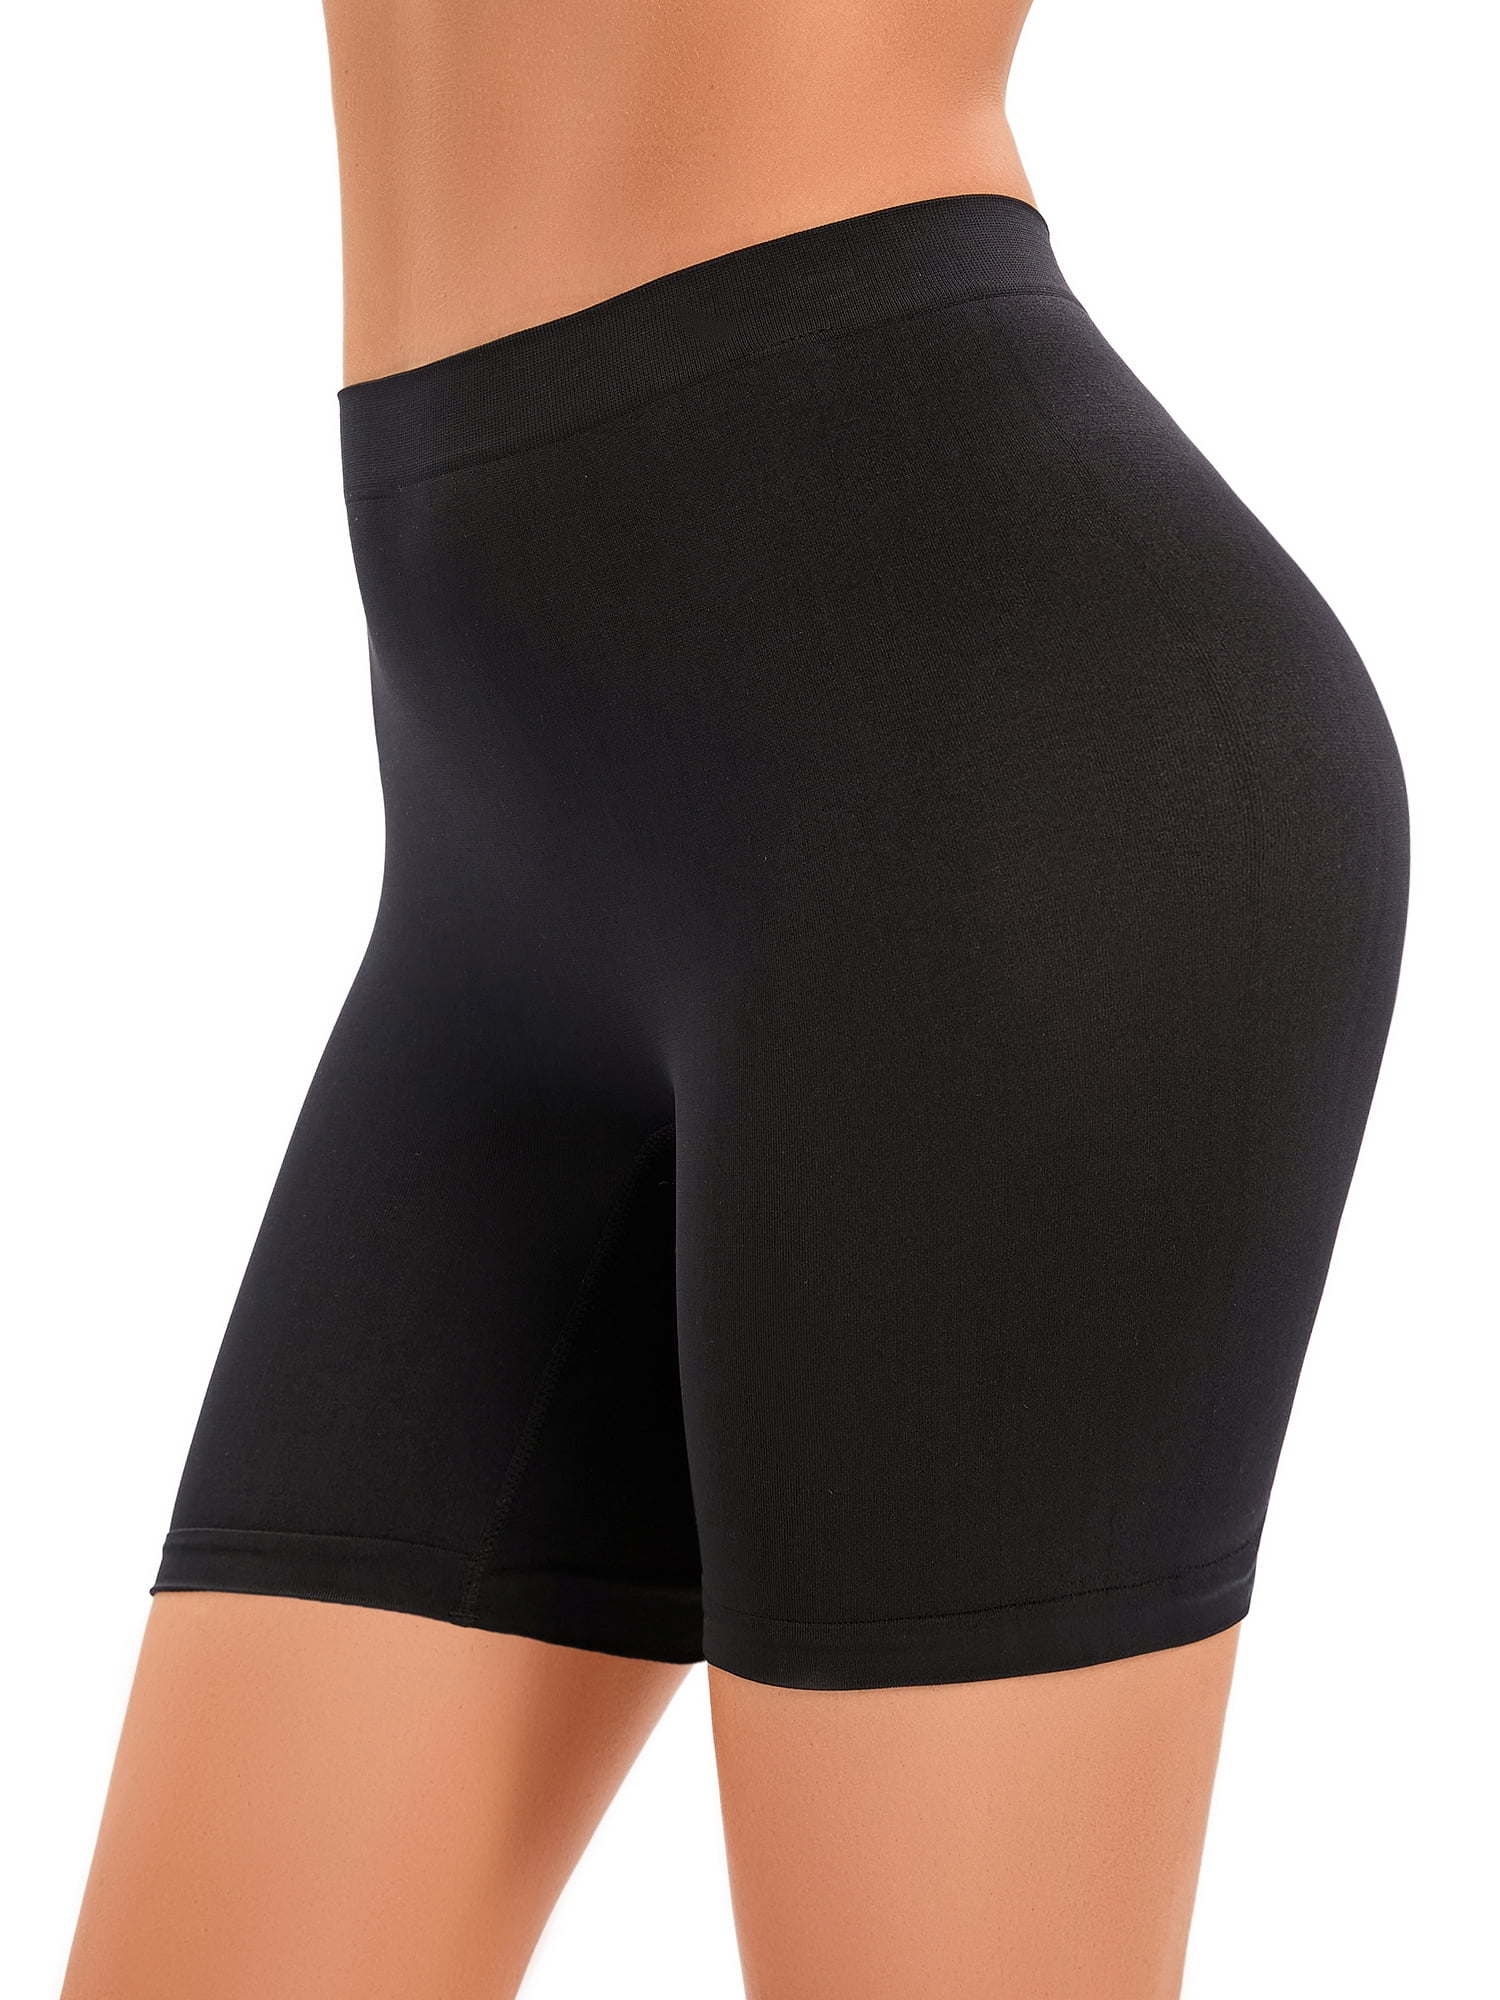 ZOUYUE Slip Shorts for Women Under Dress,Seamless Spandex Anti